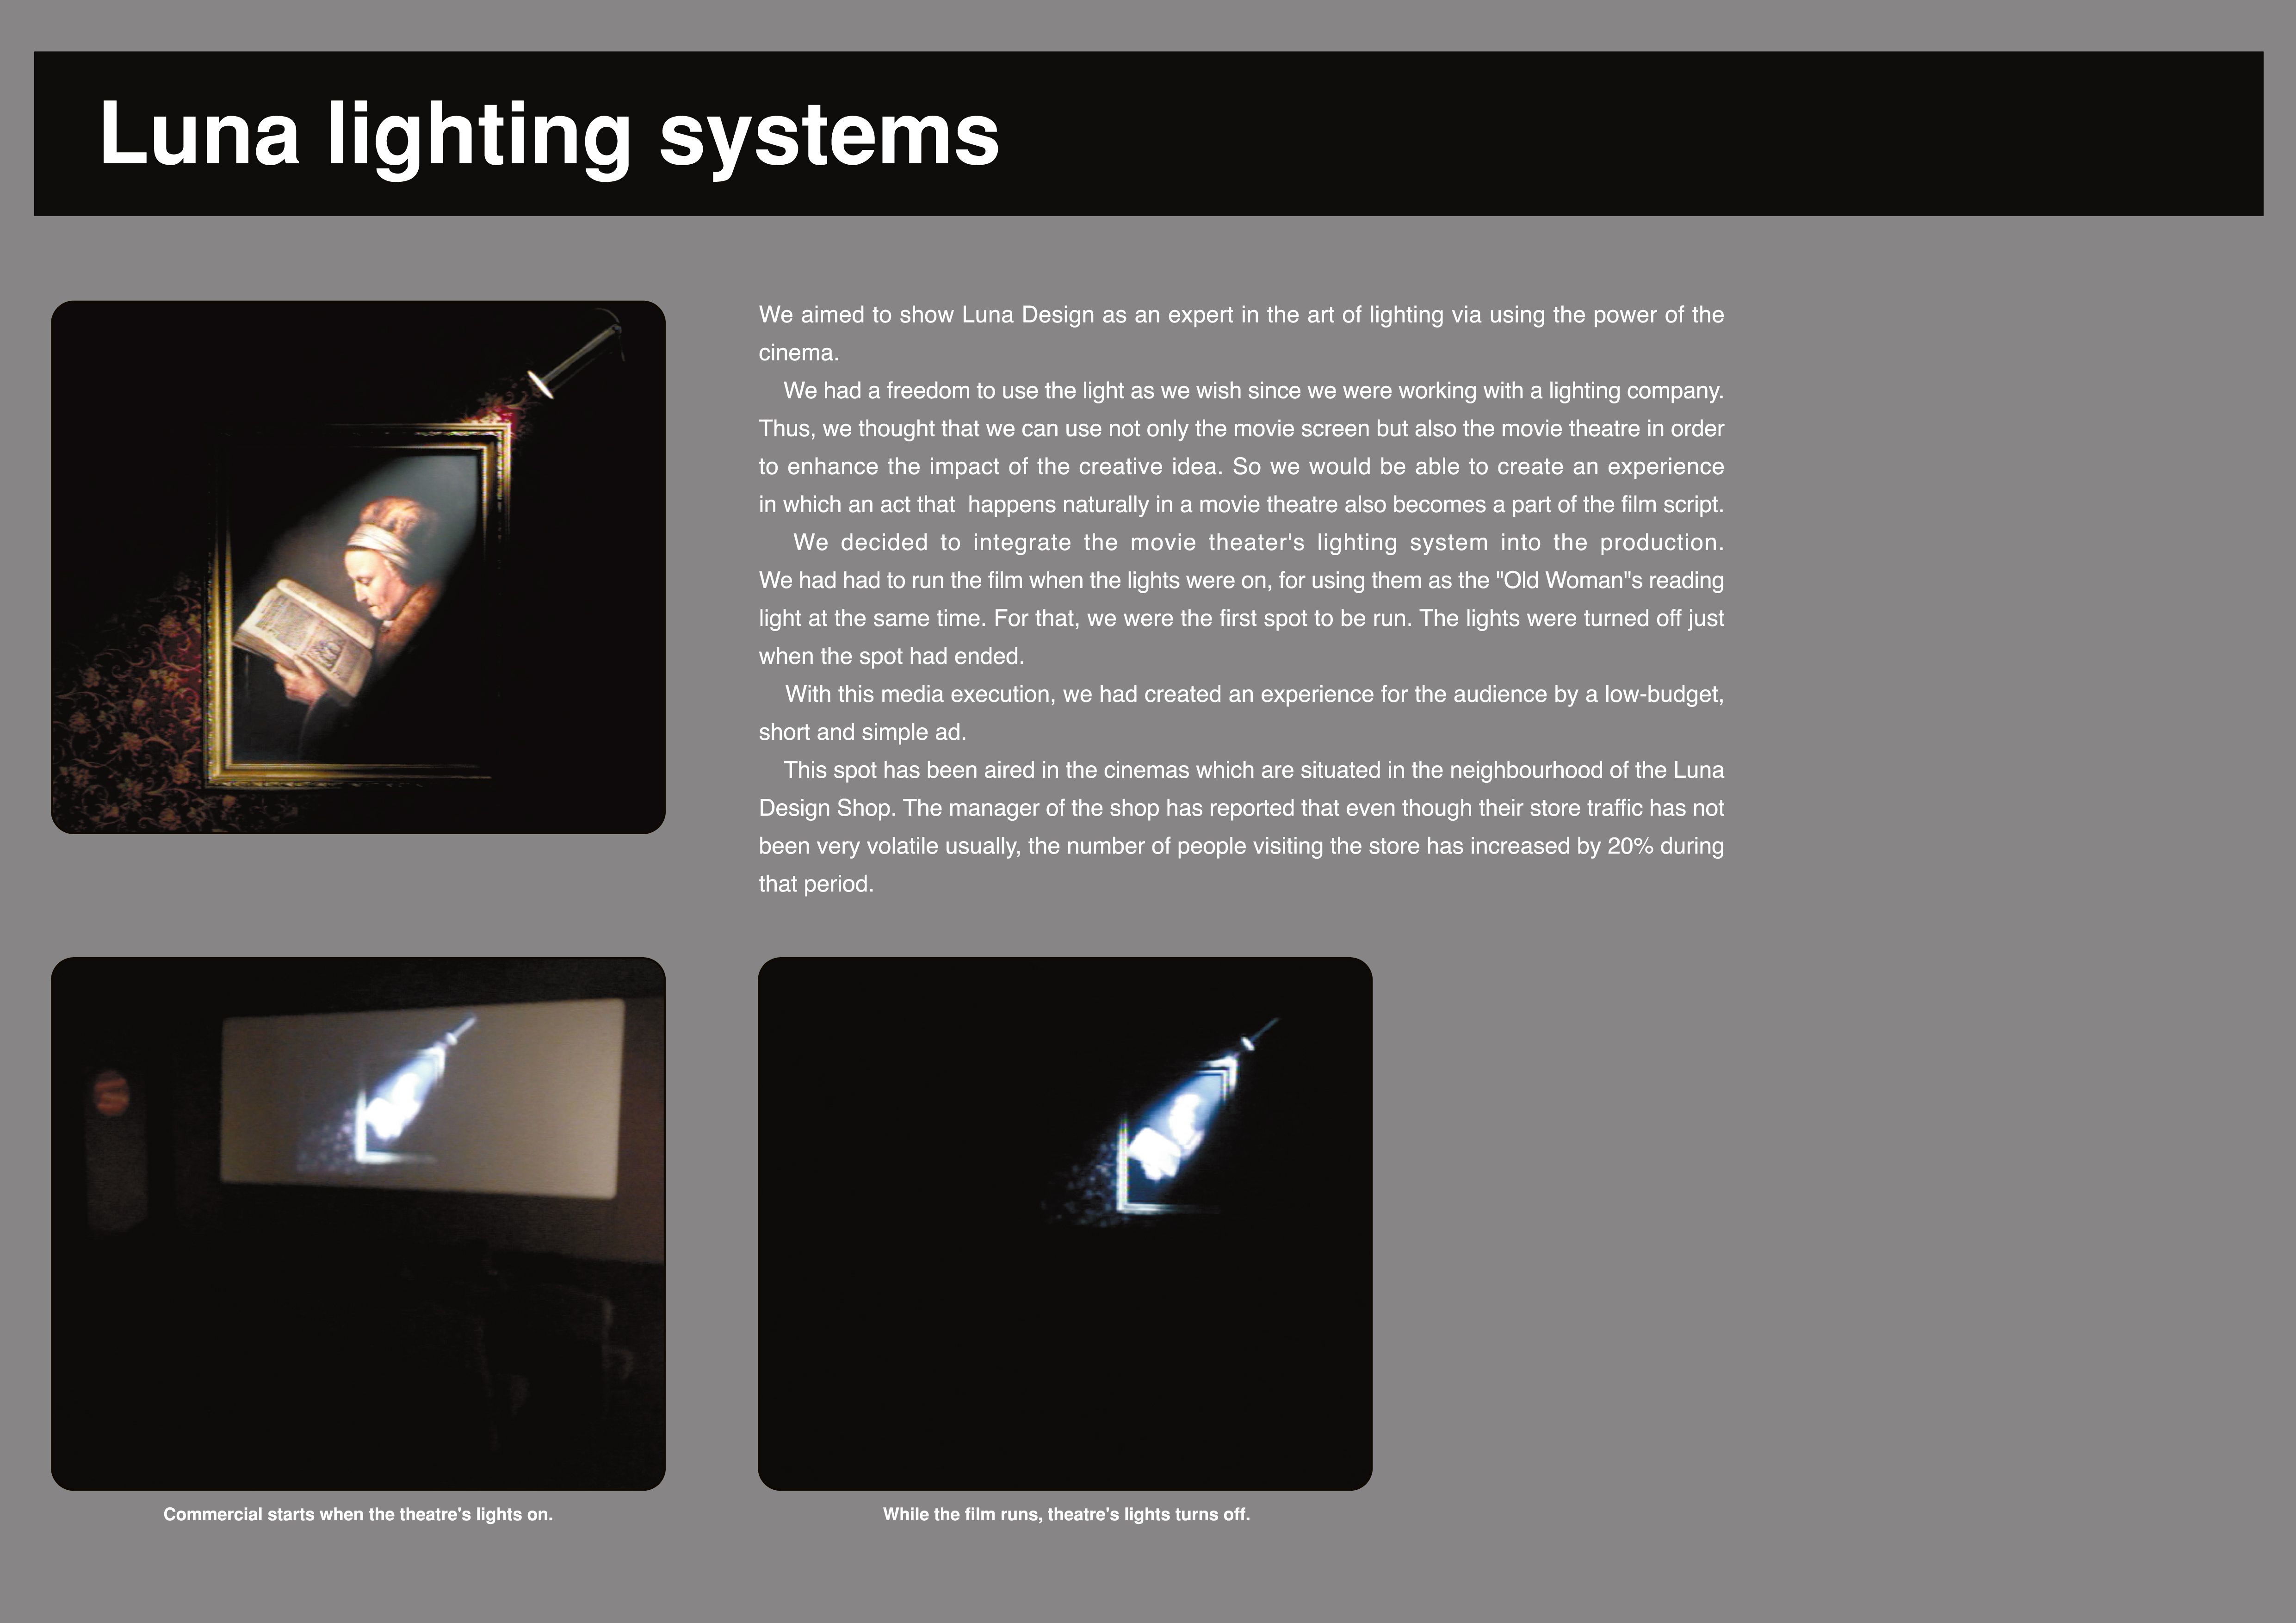 LUNA LIGHTING SYSTEMS